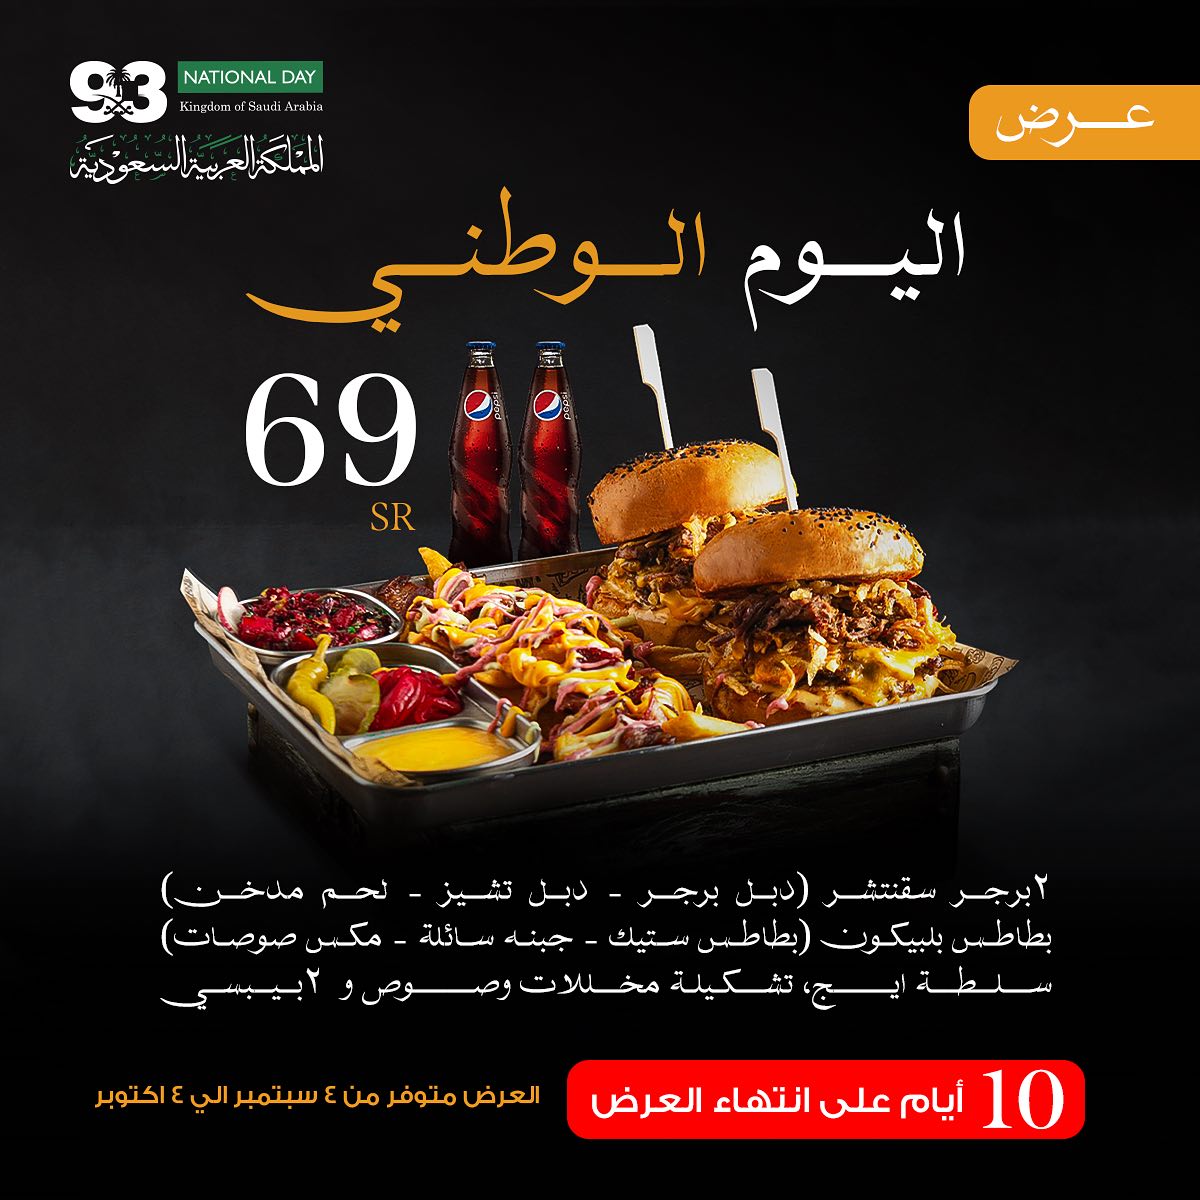 382819113 17995142363485755 6781625440504665497 n - عروض المطاعم اليوم في السعودية | أشهي الأصناف بأقل الأسعار